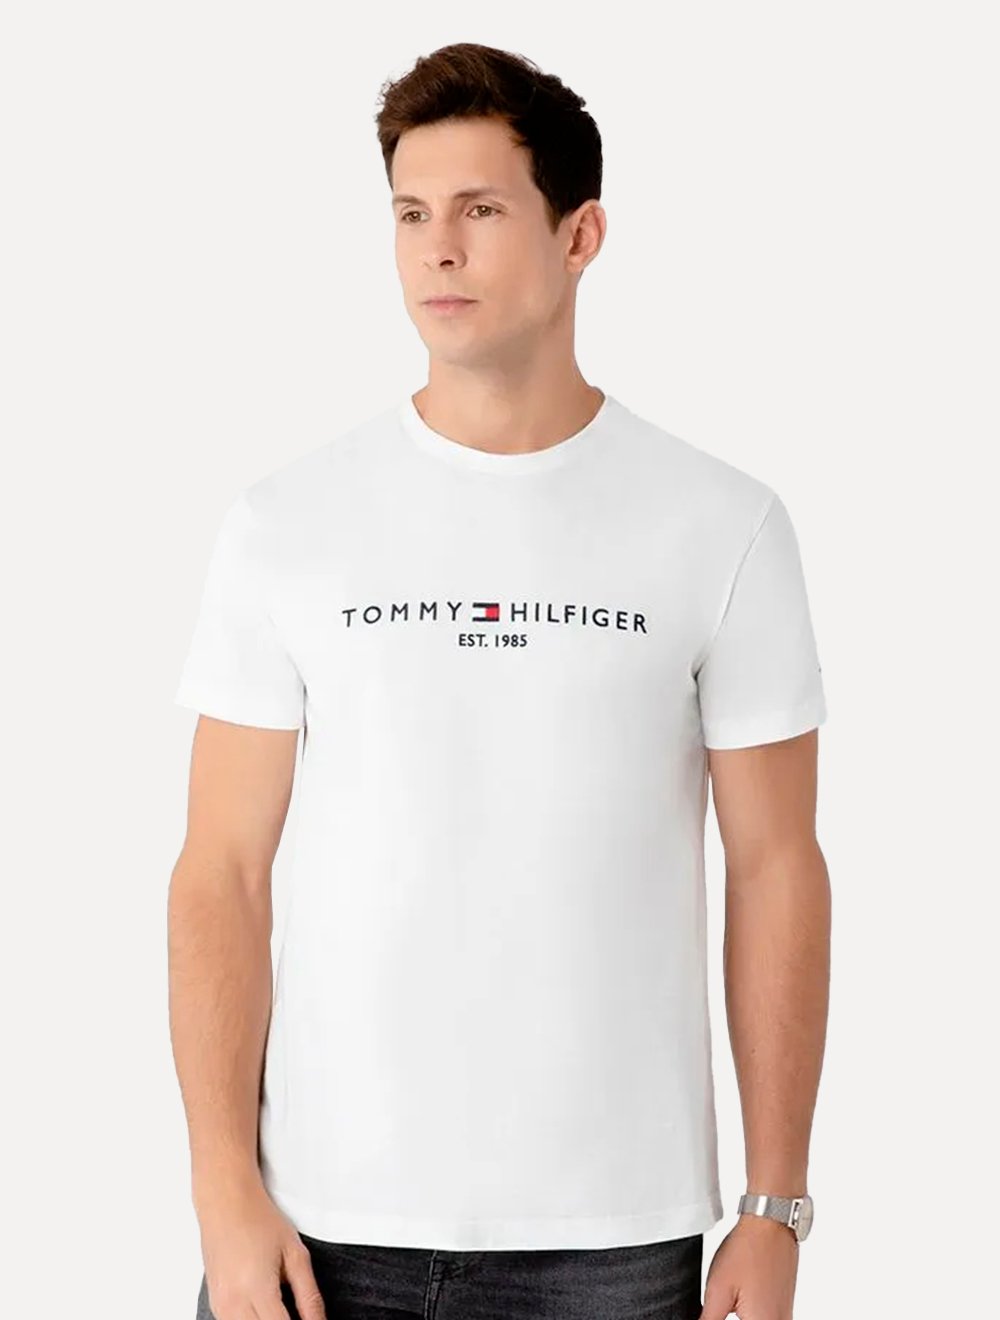 Camiseta Polo Tommy Hilfiger Estampada Branca - Estilo e Elegância